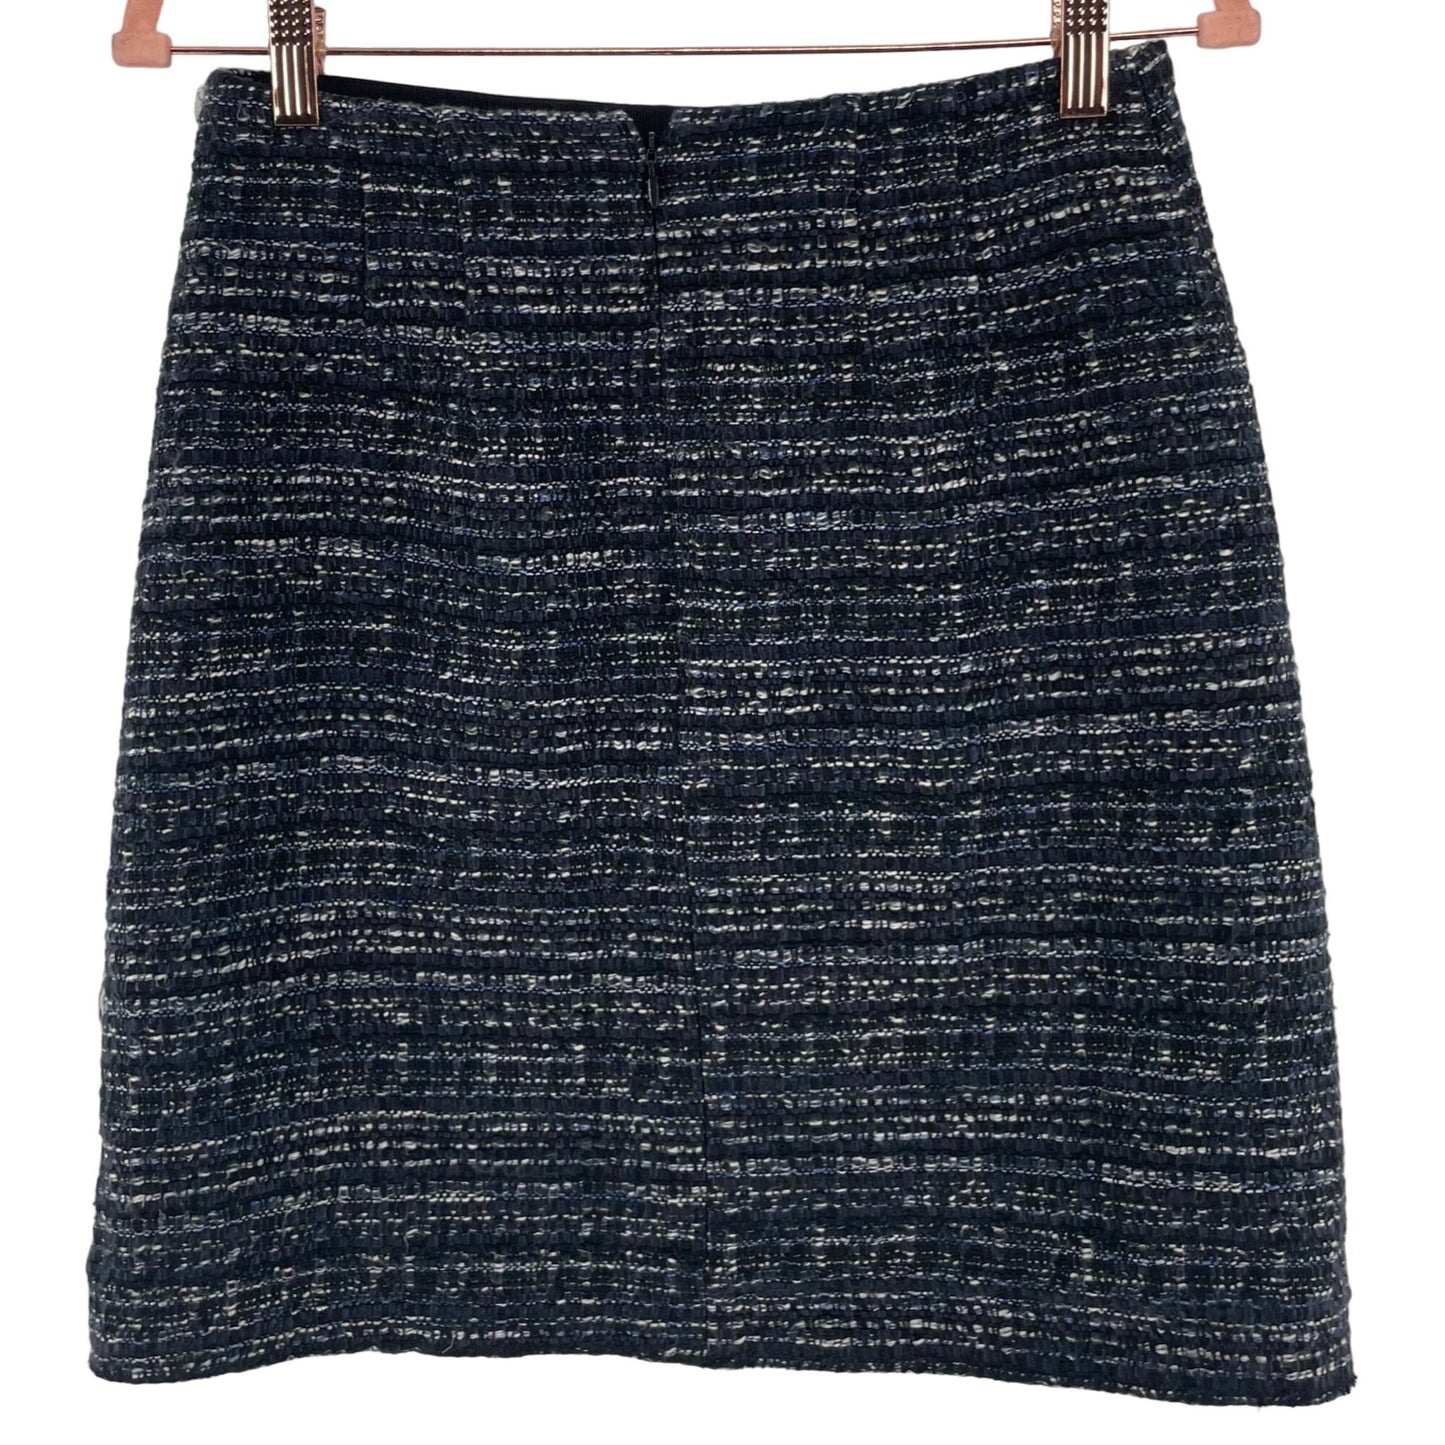 Ann Taylor Petite Women's Size 4P Navy/Black/White Tweed A-Line Skirt